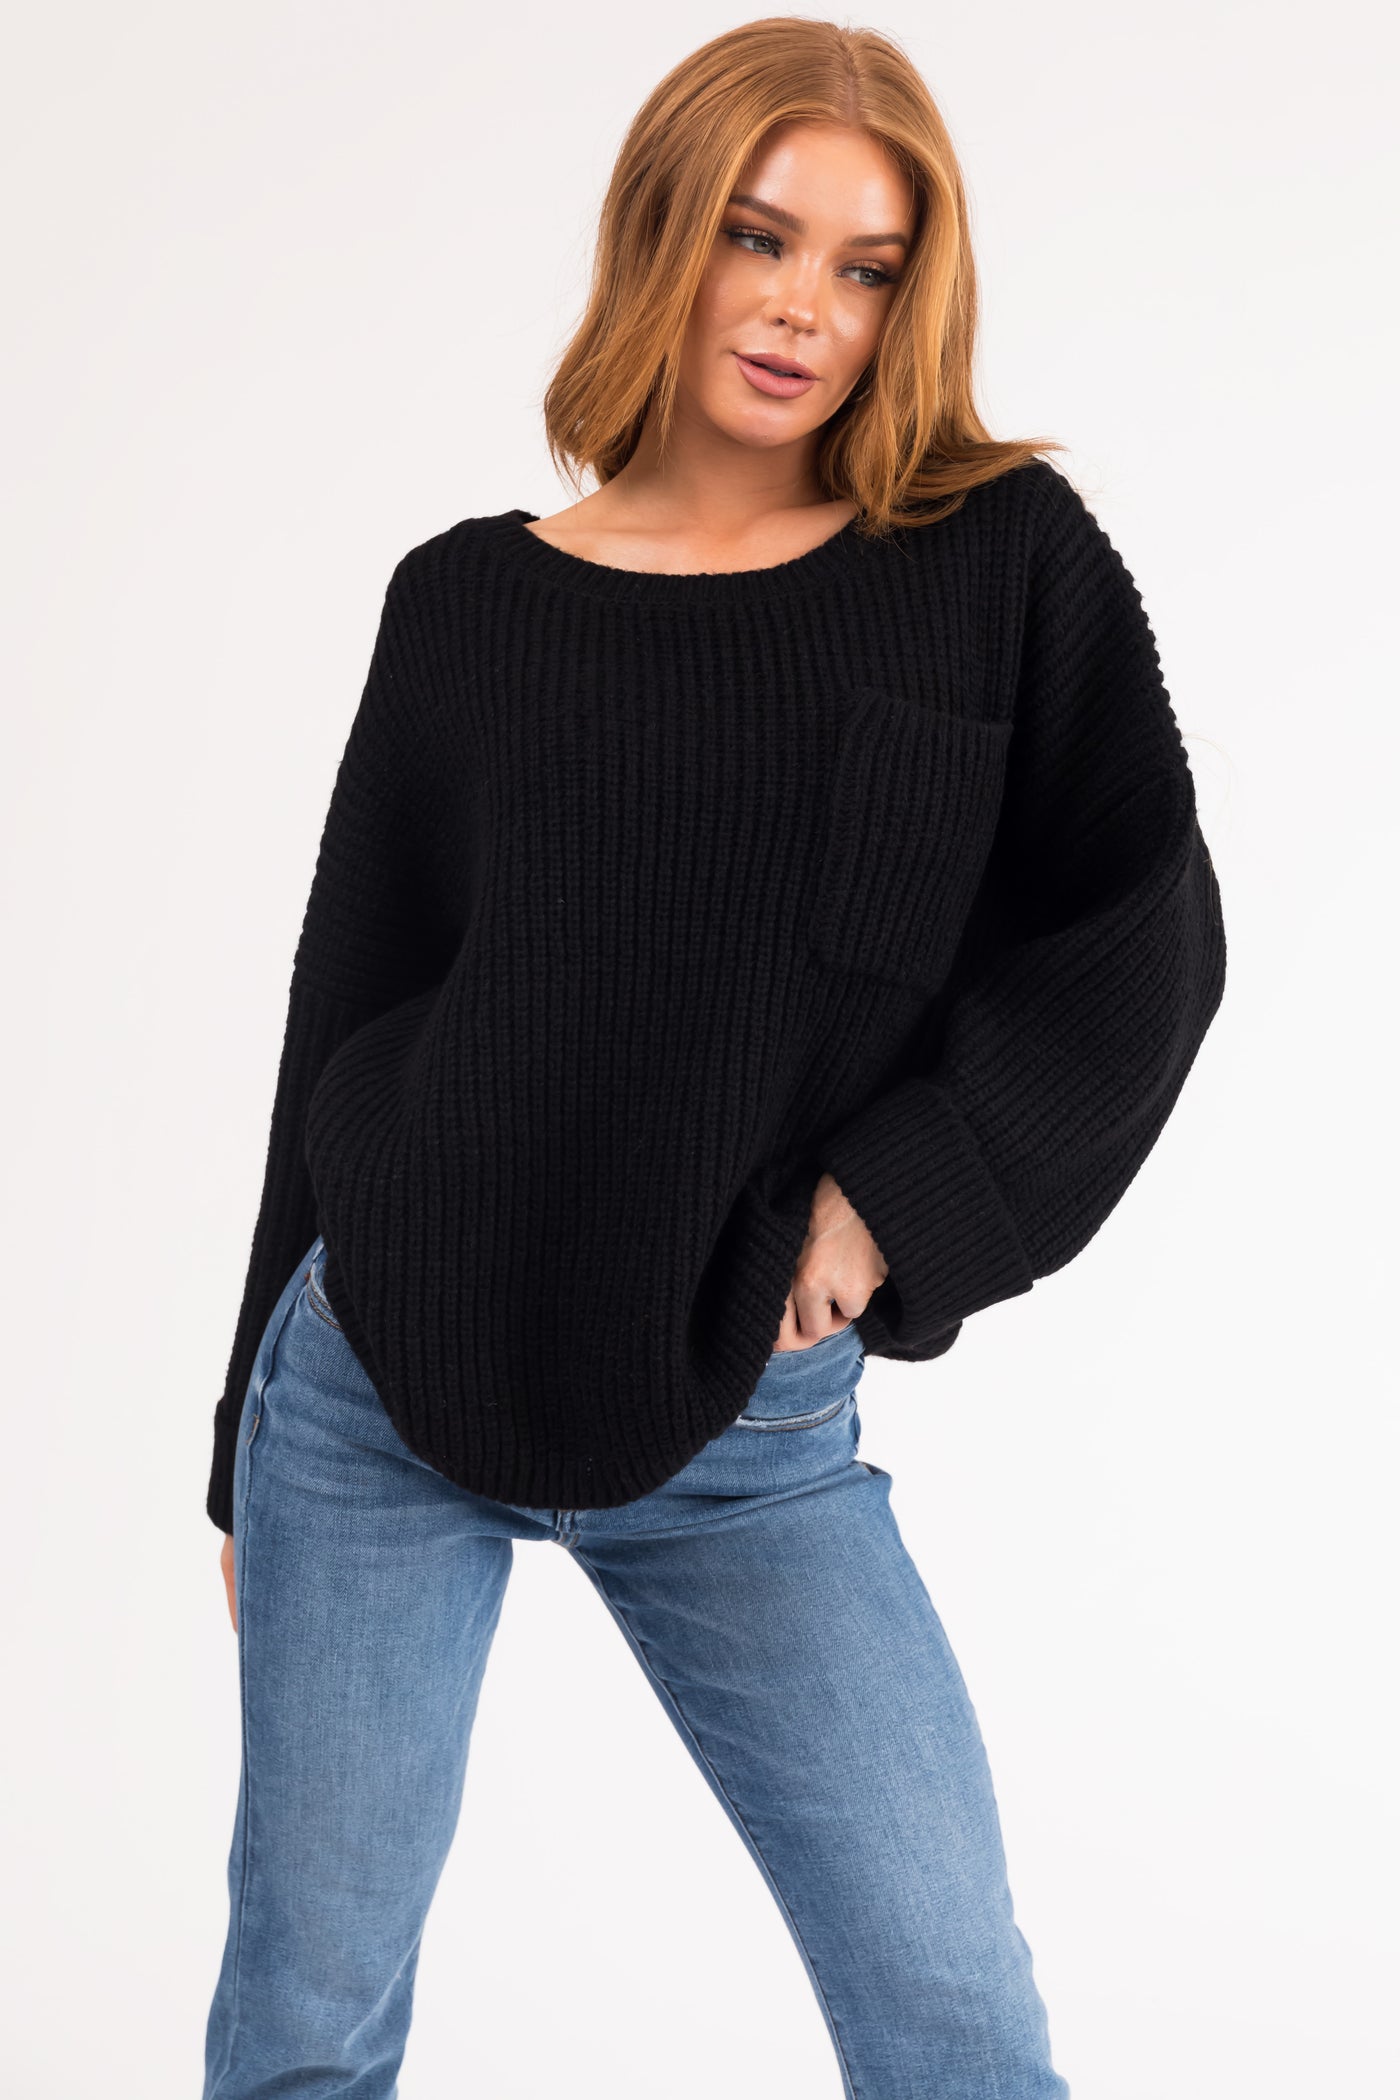 Black Oversized Chest Pocket Cozy Sweater | Lime Lush